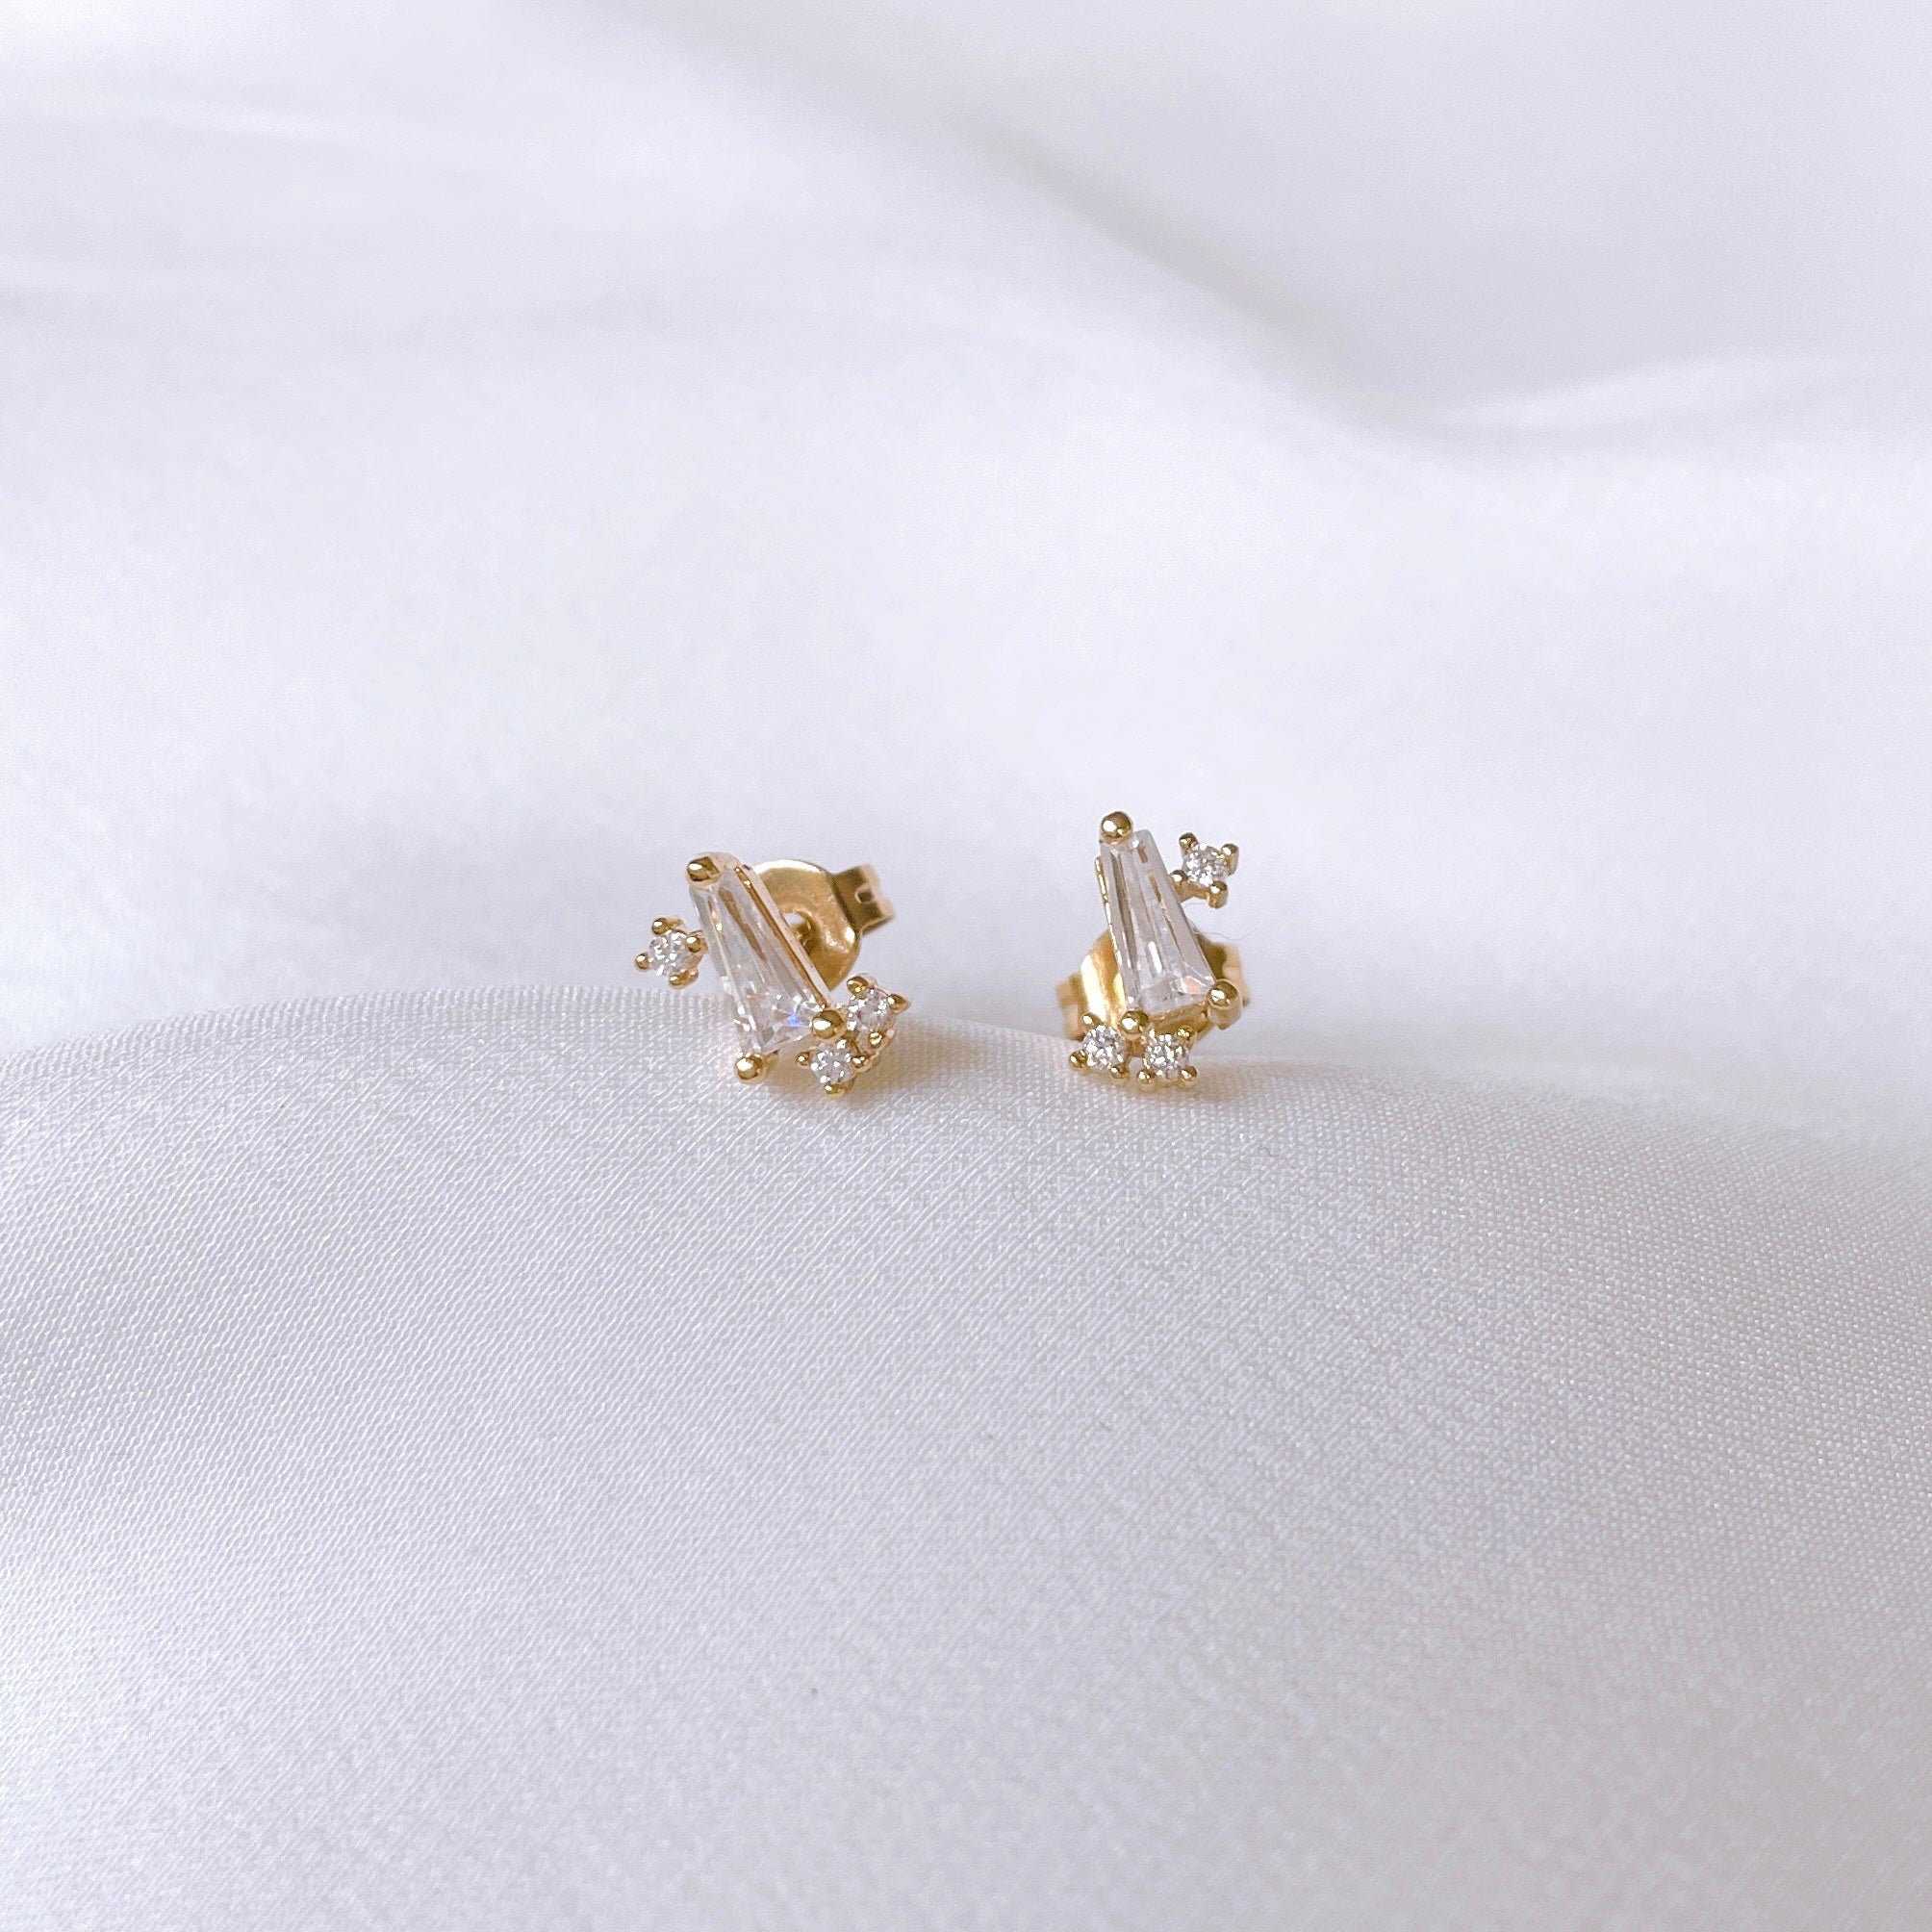 Gold-plated “Lenny” earrings